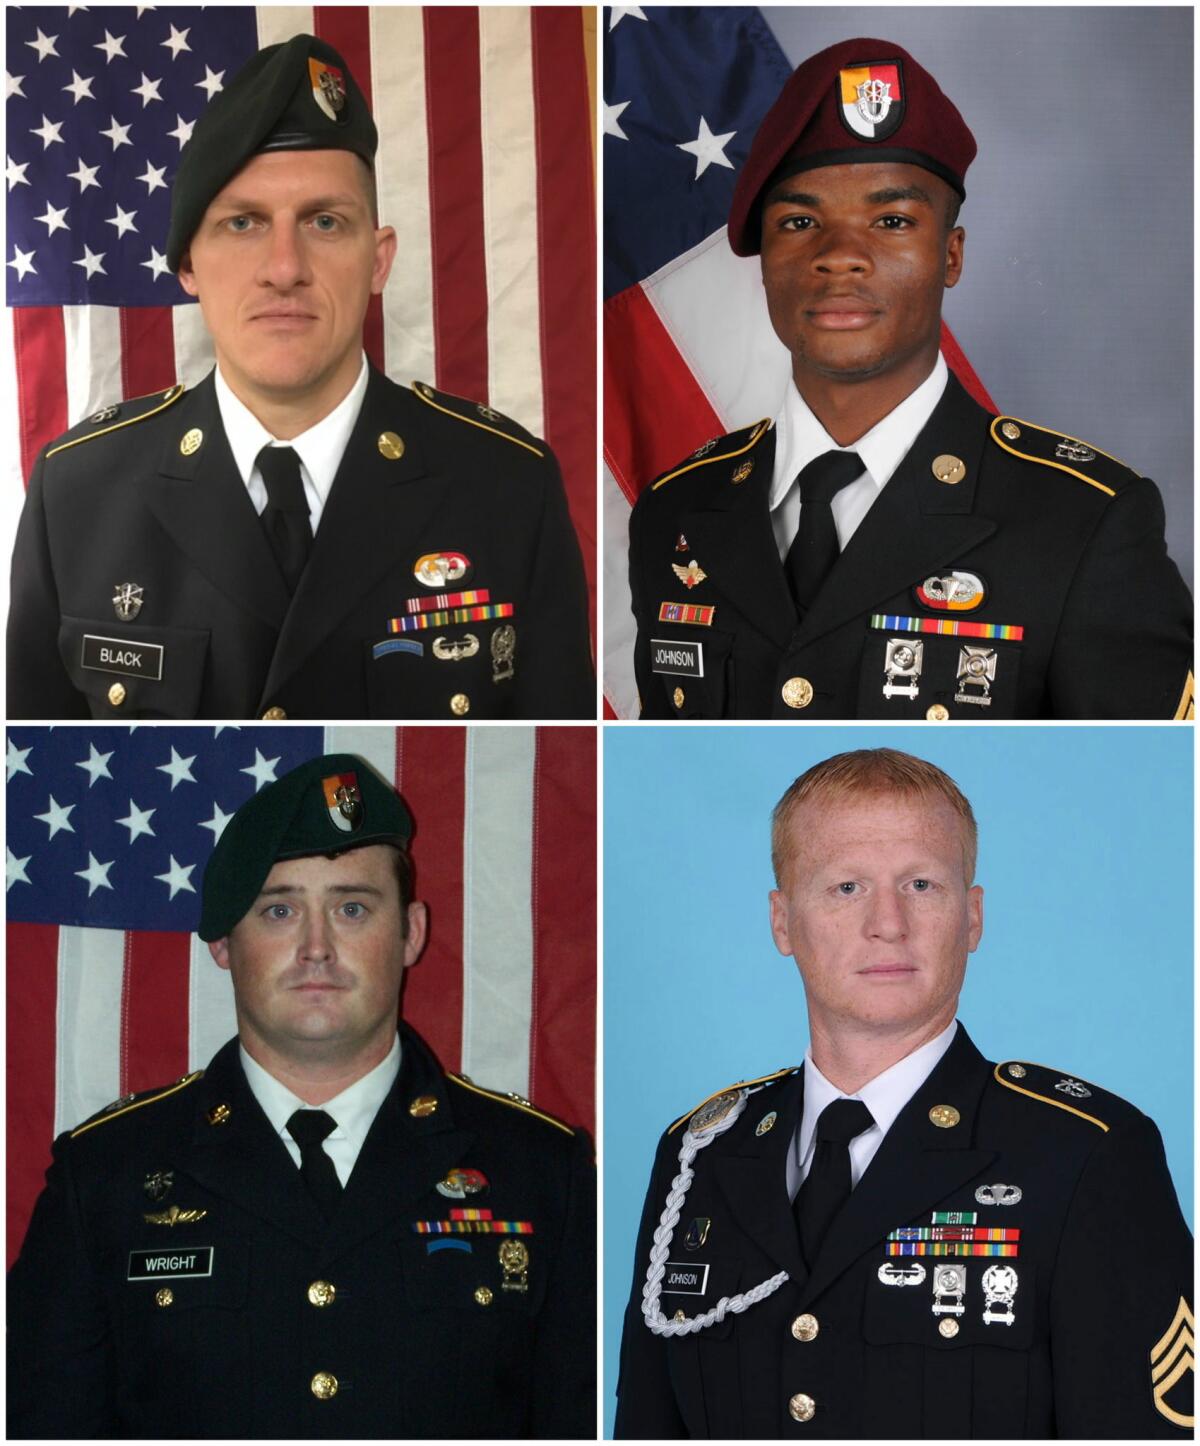 Clockwise from upper left: Army Staff Sgt. Bryan C. Black, 35; Sgt. La David Johnson, 25; Staff Sgt. Jeremiah W. Johnson, 39; and Staff Sgt. Dustin M. Wright, 29.